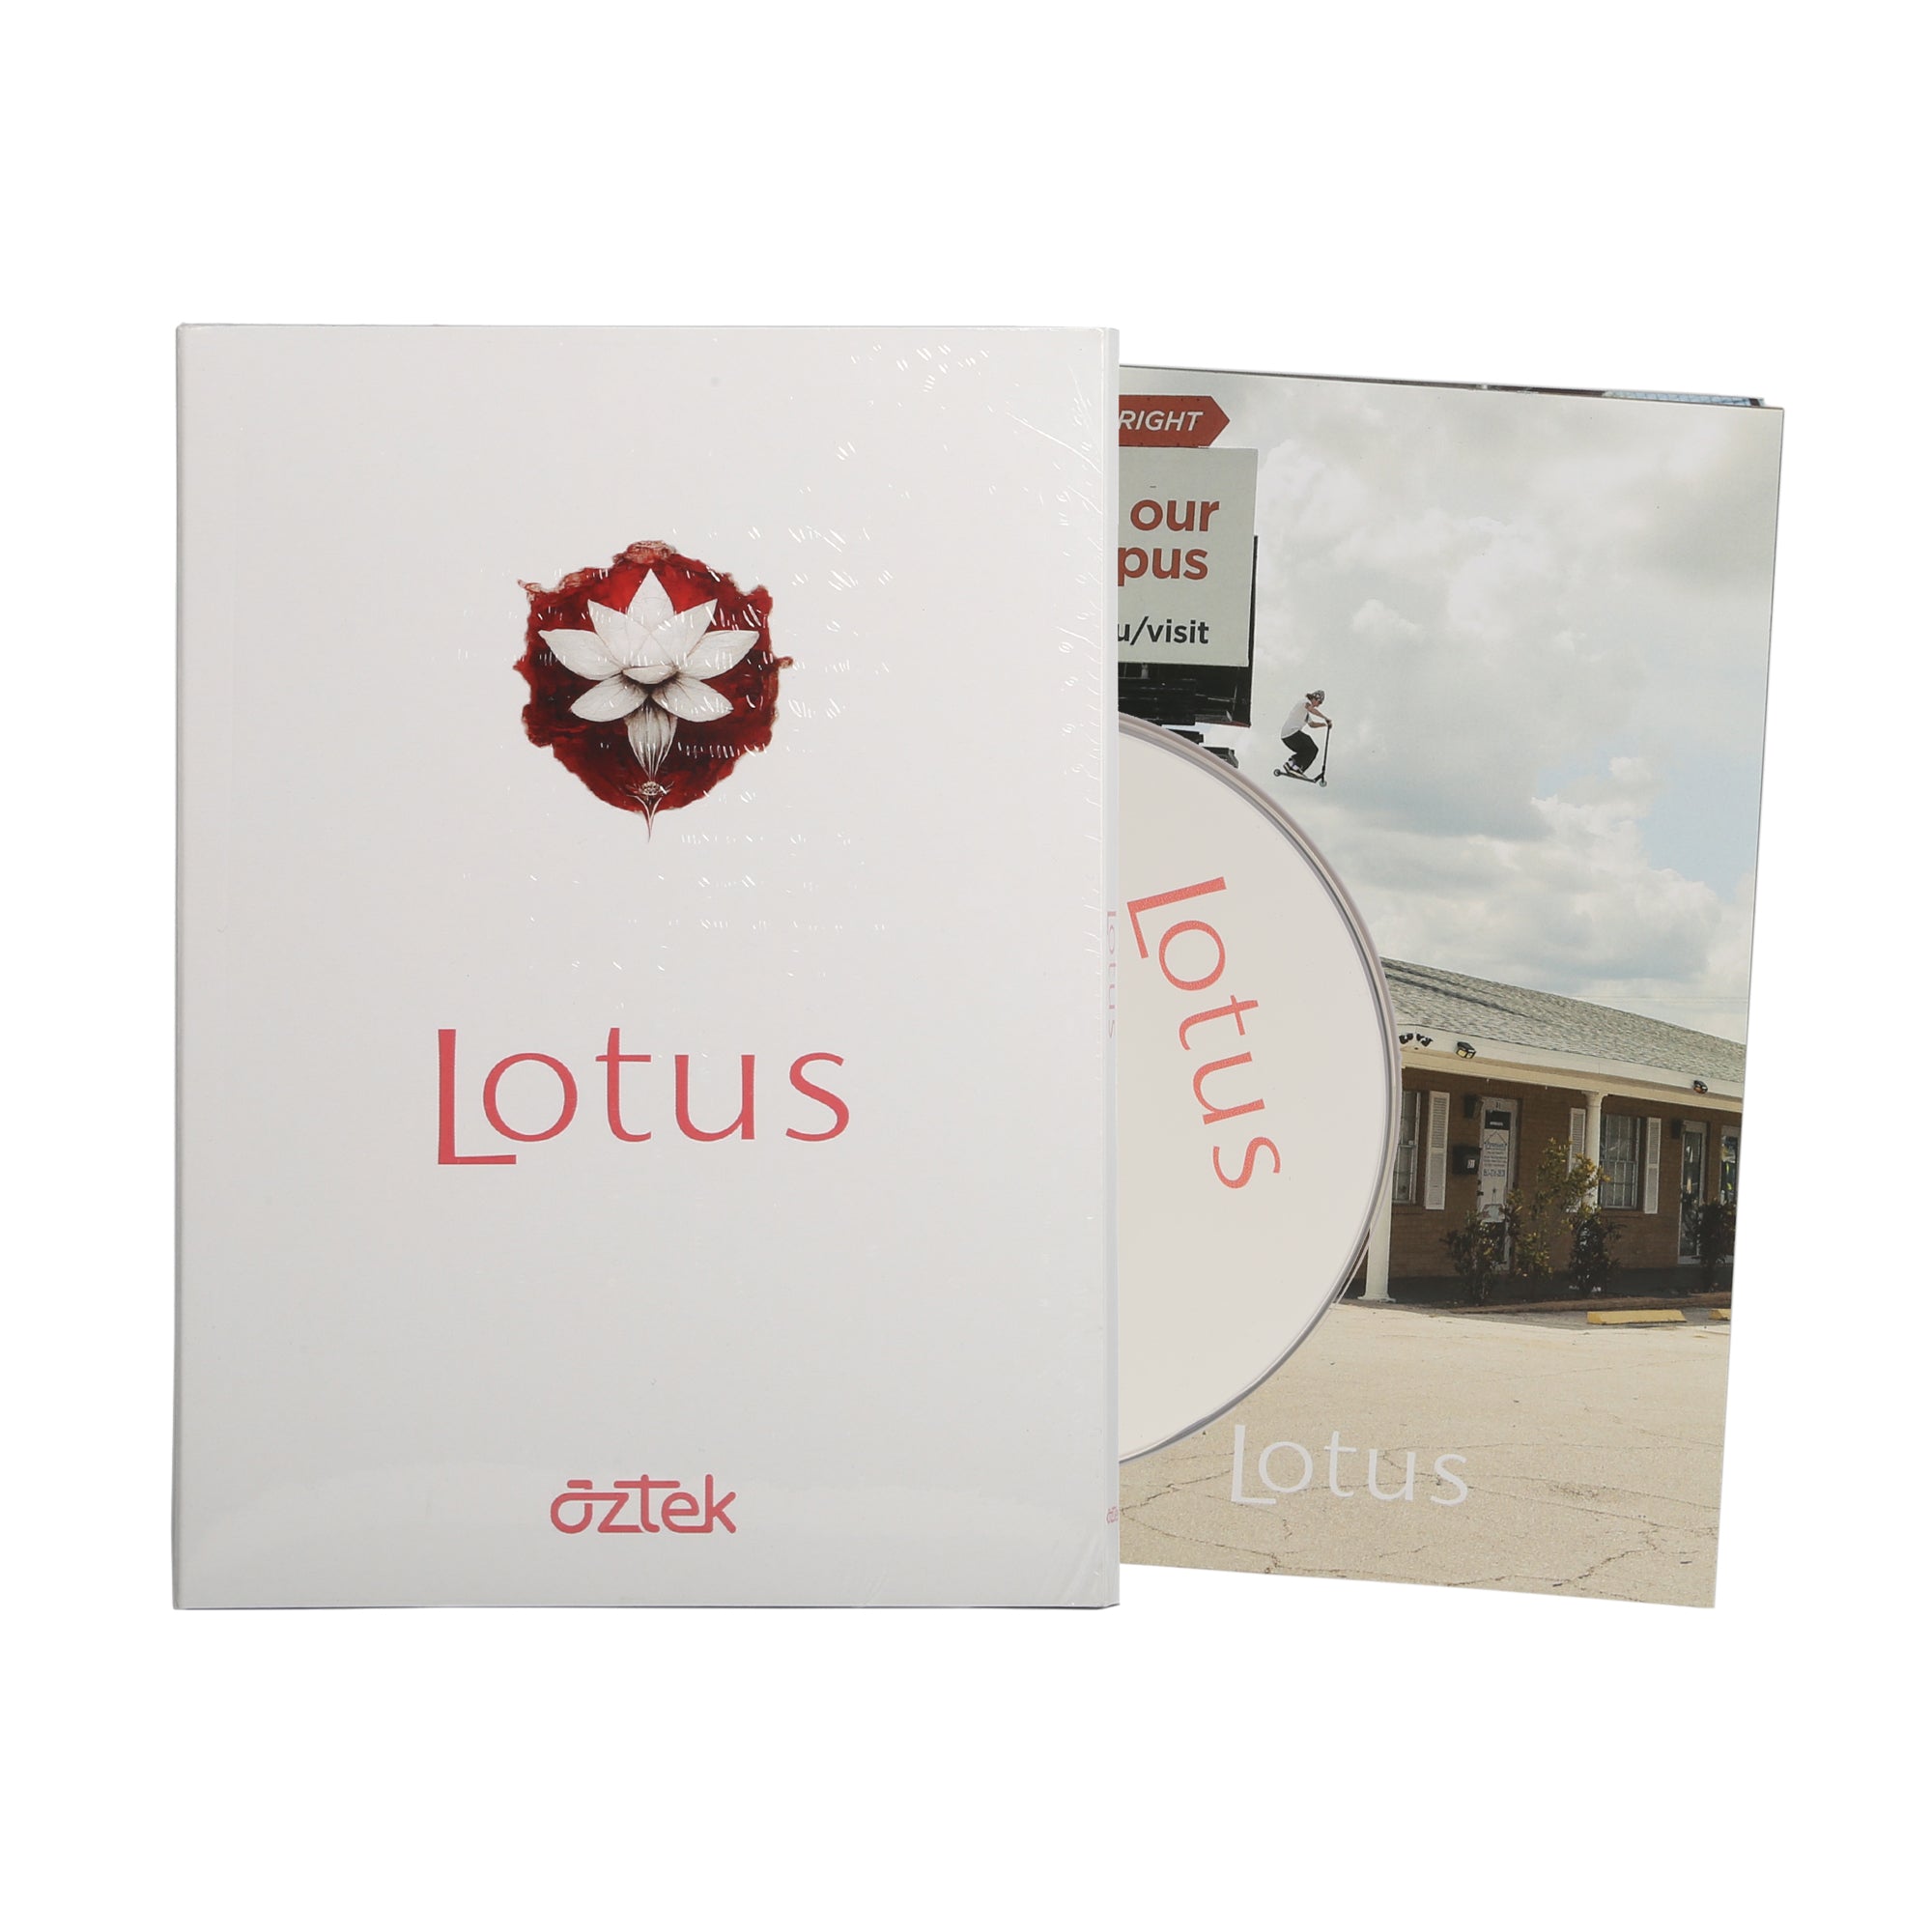 Lotus - Blu-Ray Disc and Photobook